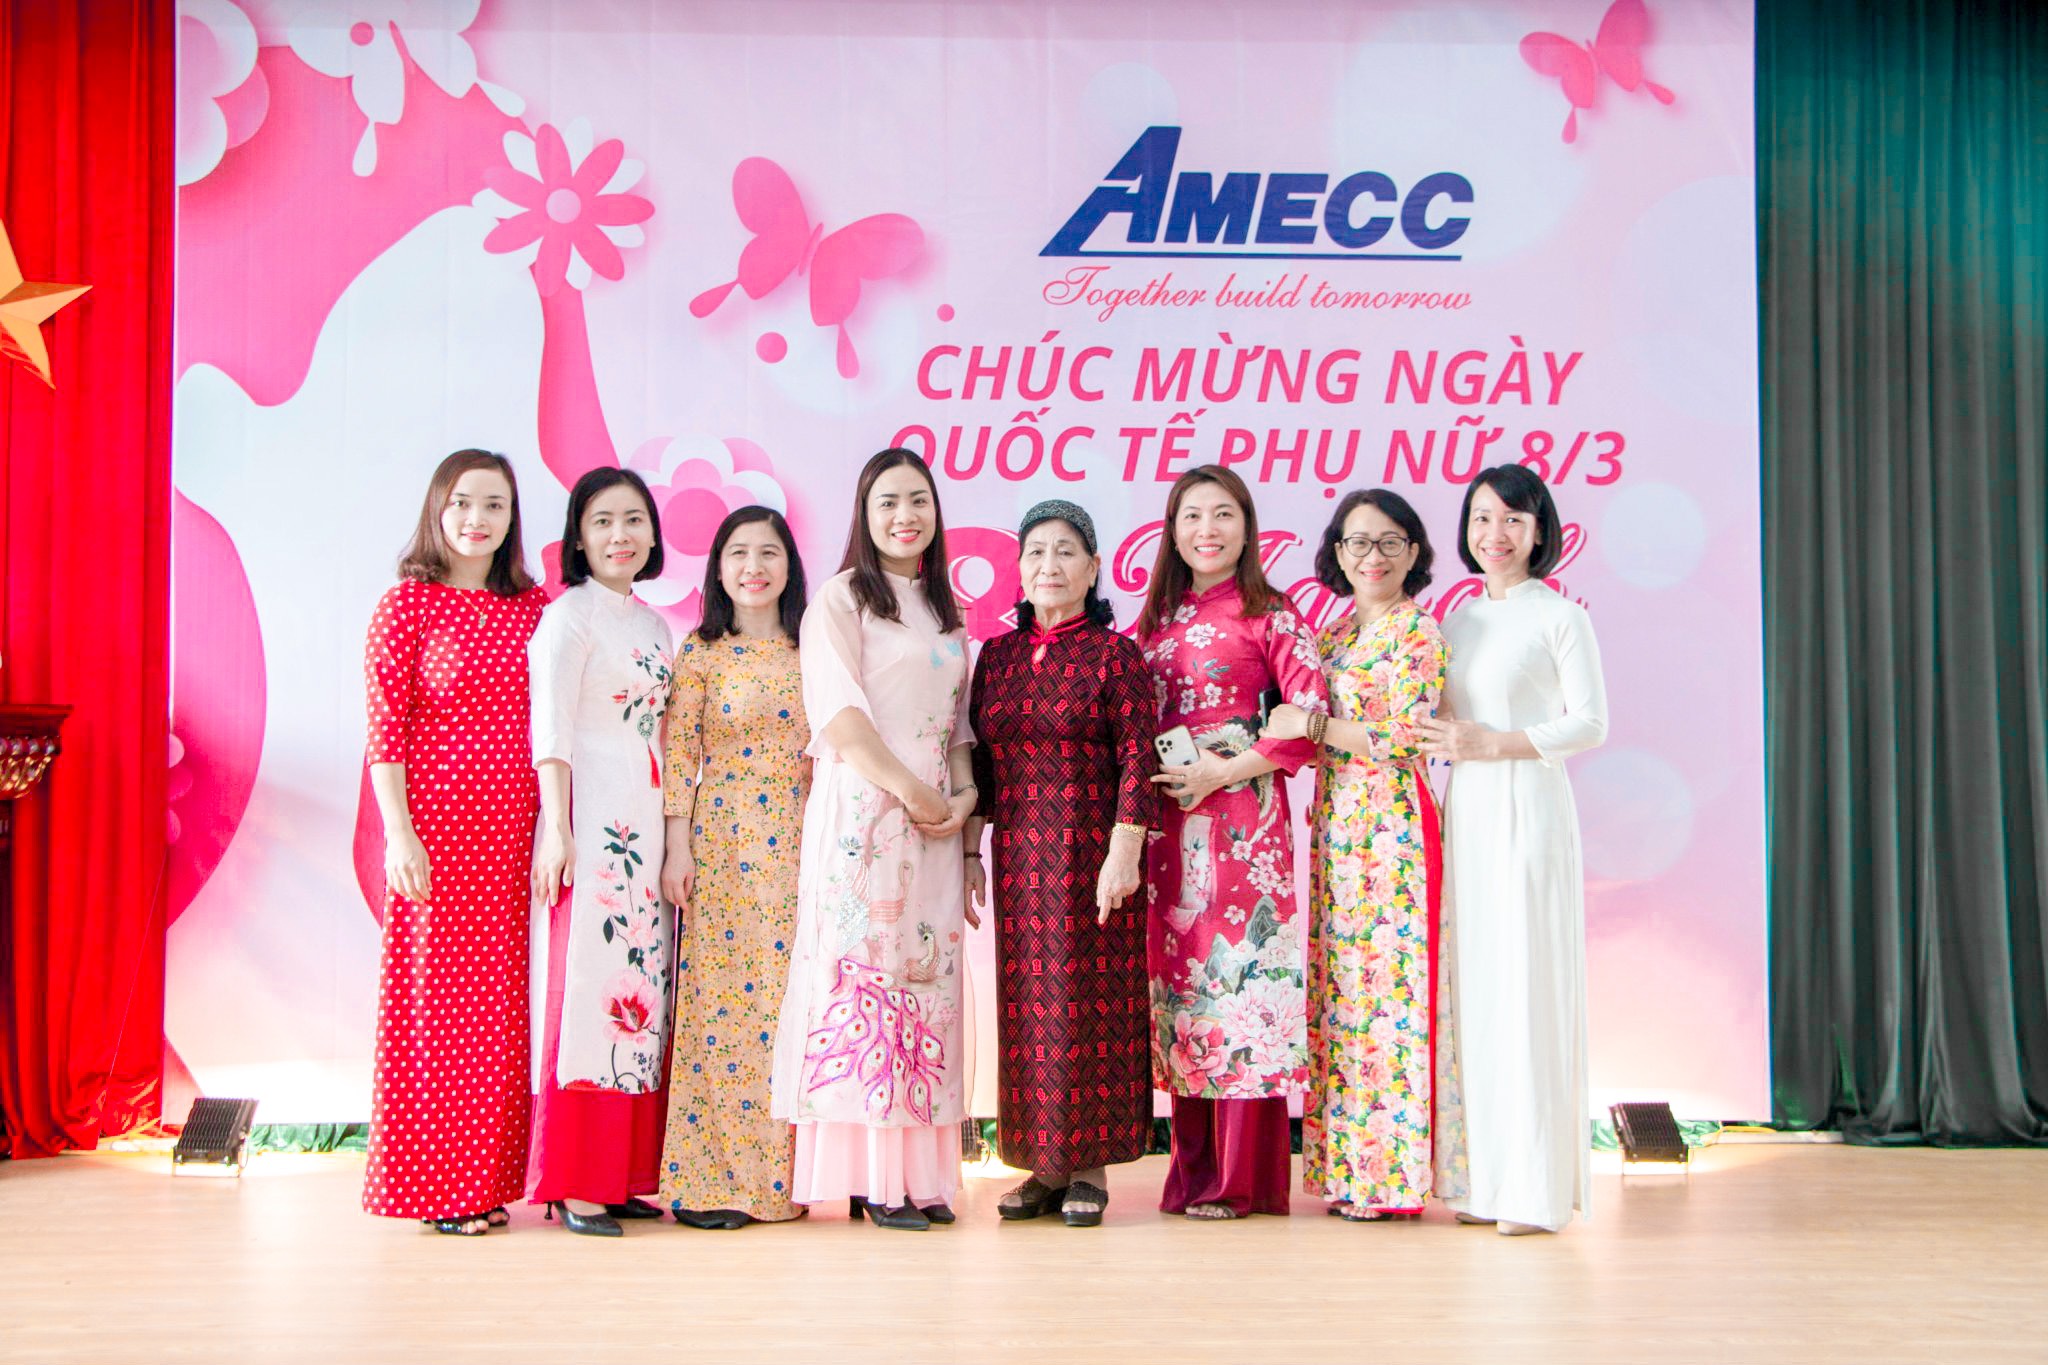 Amecc organized festival to happy international women's day 8/3